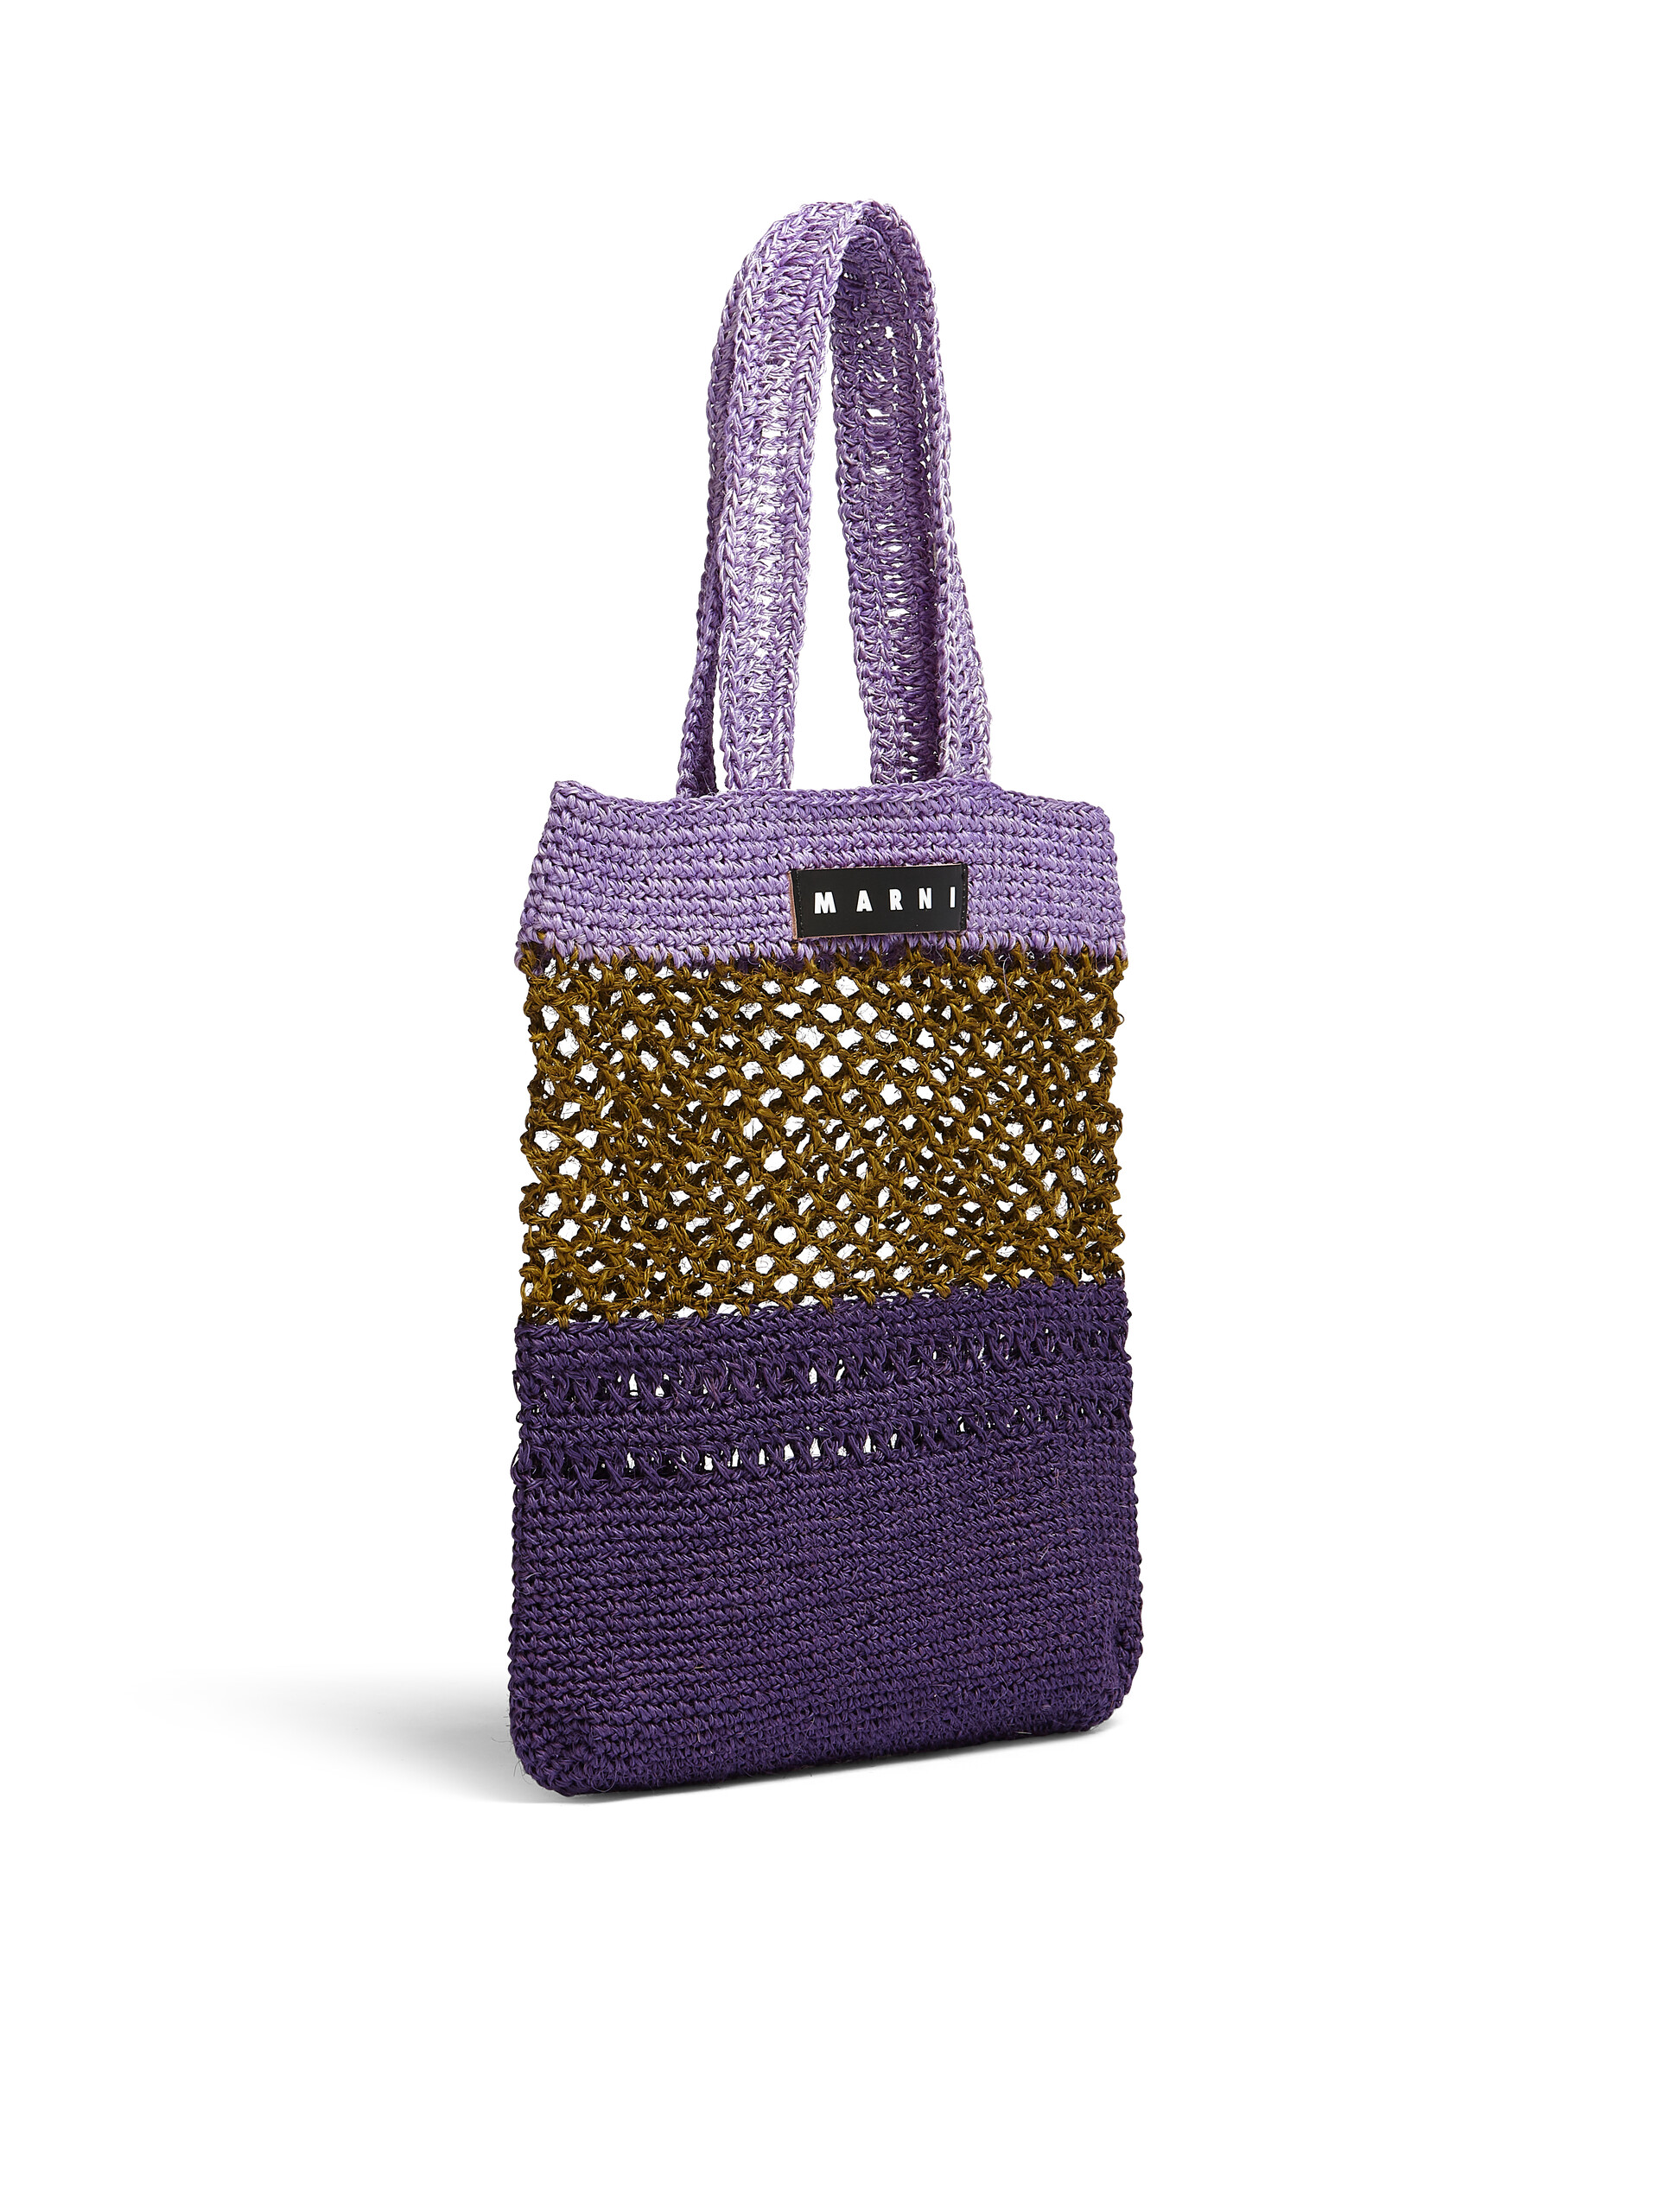 MARNI MARKET DRUM bag in purple and green natural fiber - Shopping Bags - Image 2